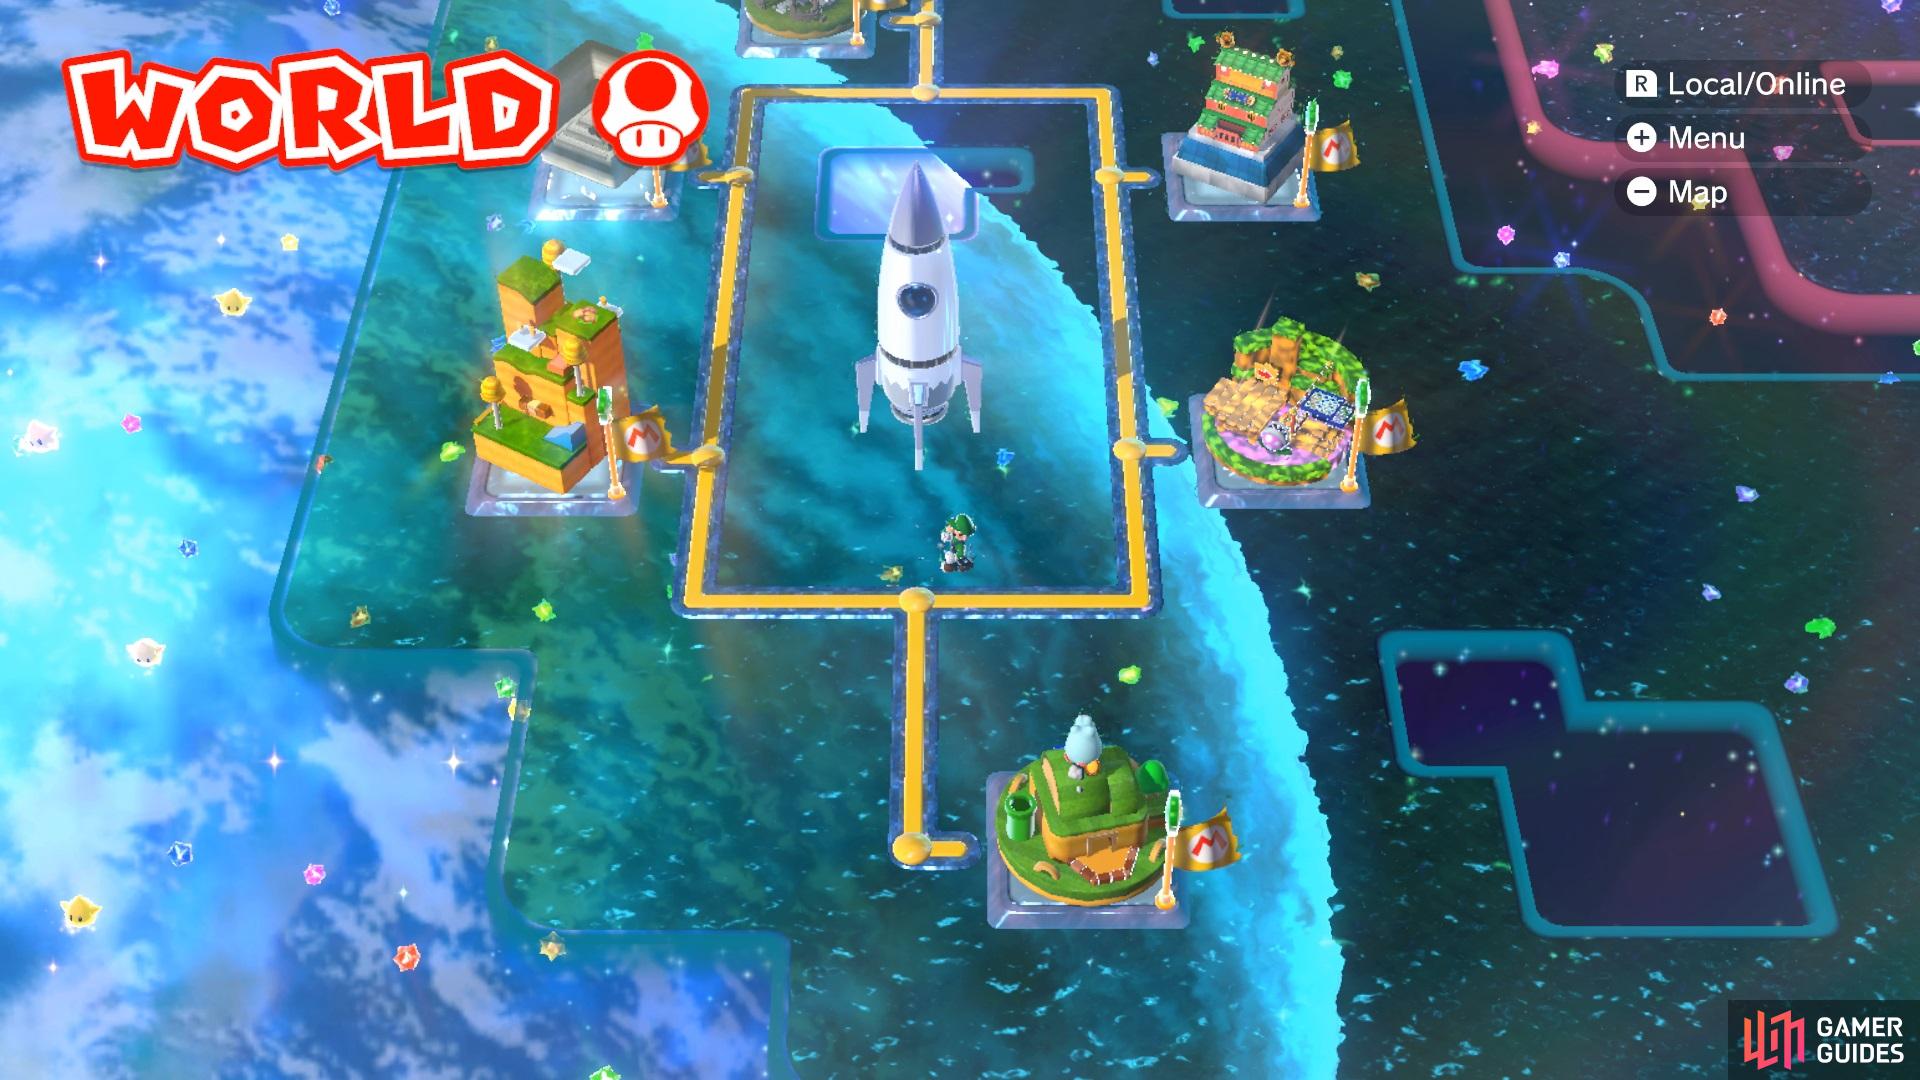 Super Mario 3D World Guides and Walkthrough